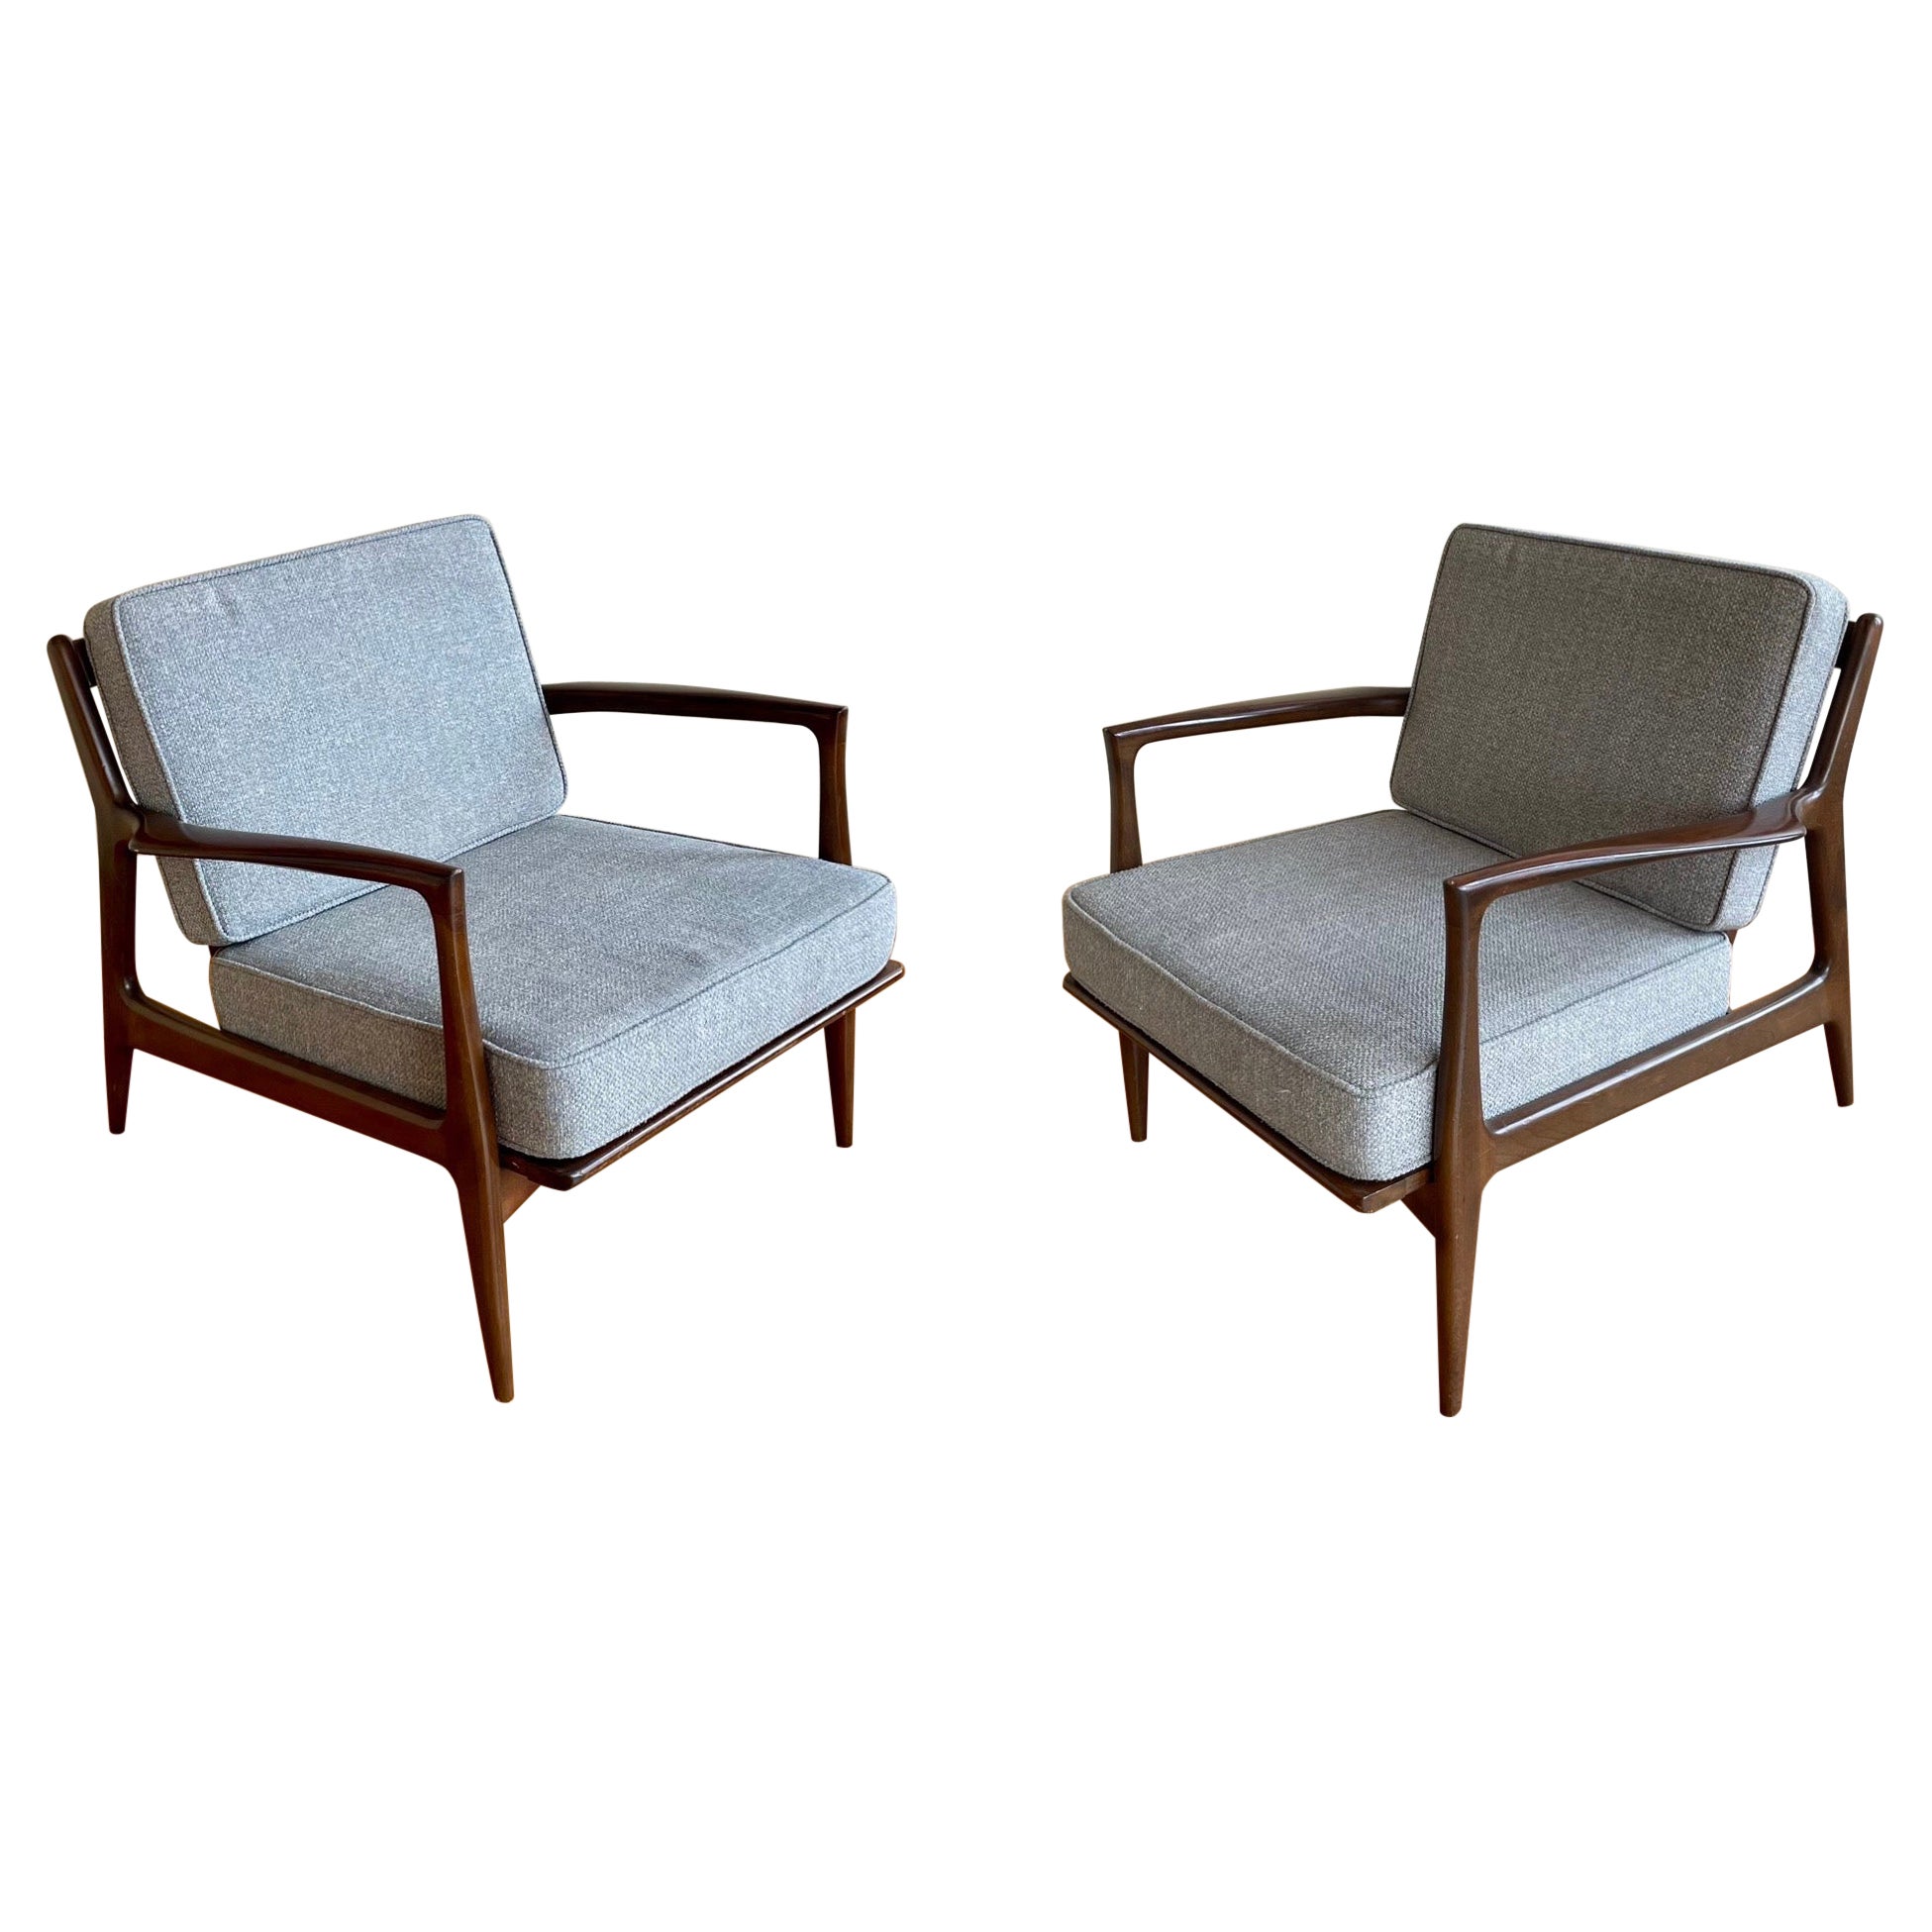 Pair of Danish Modern Lounge Chairs by Ib Kofod-Larsen for Selig